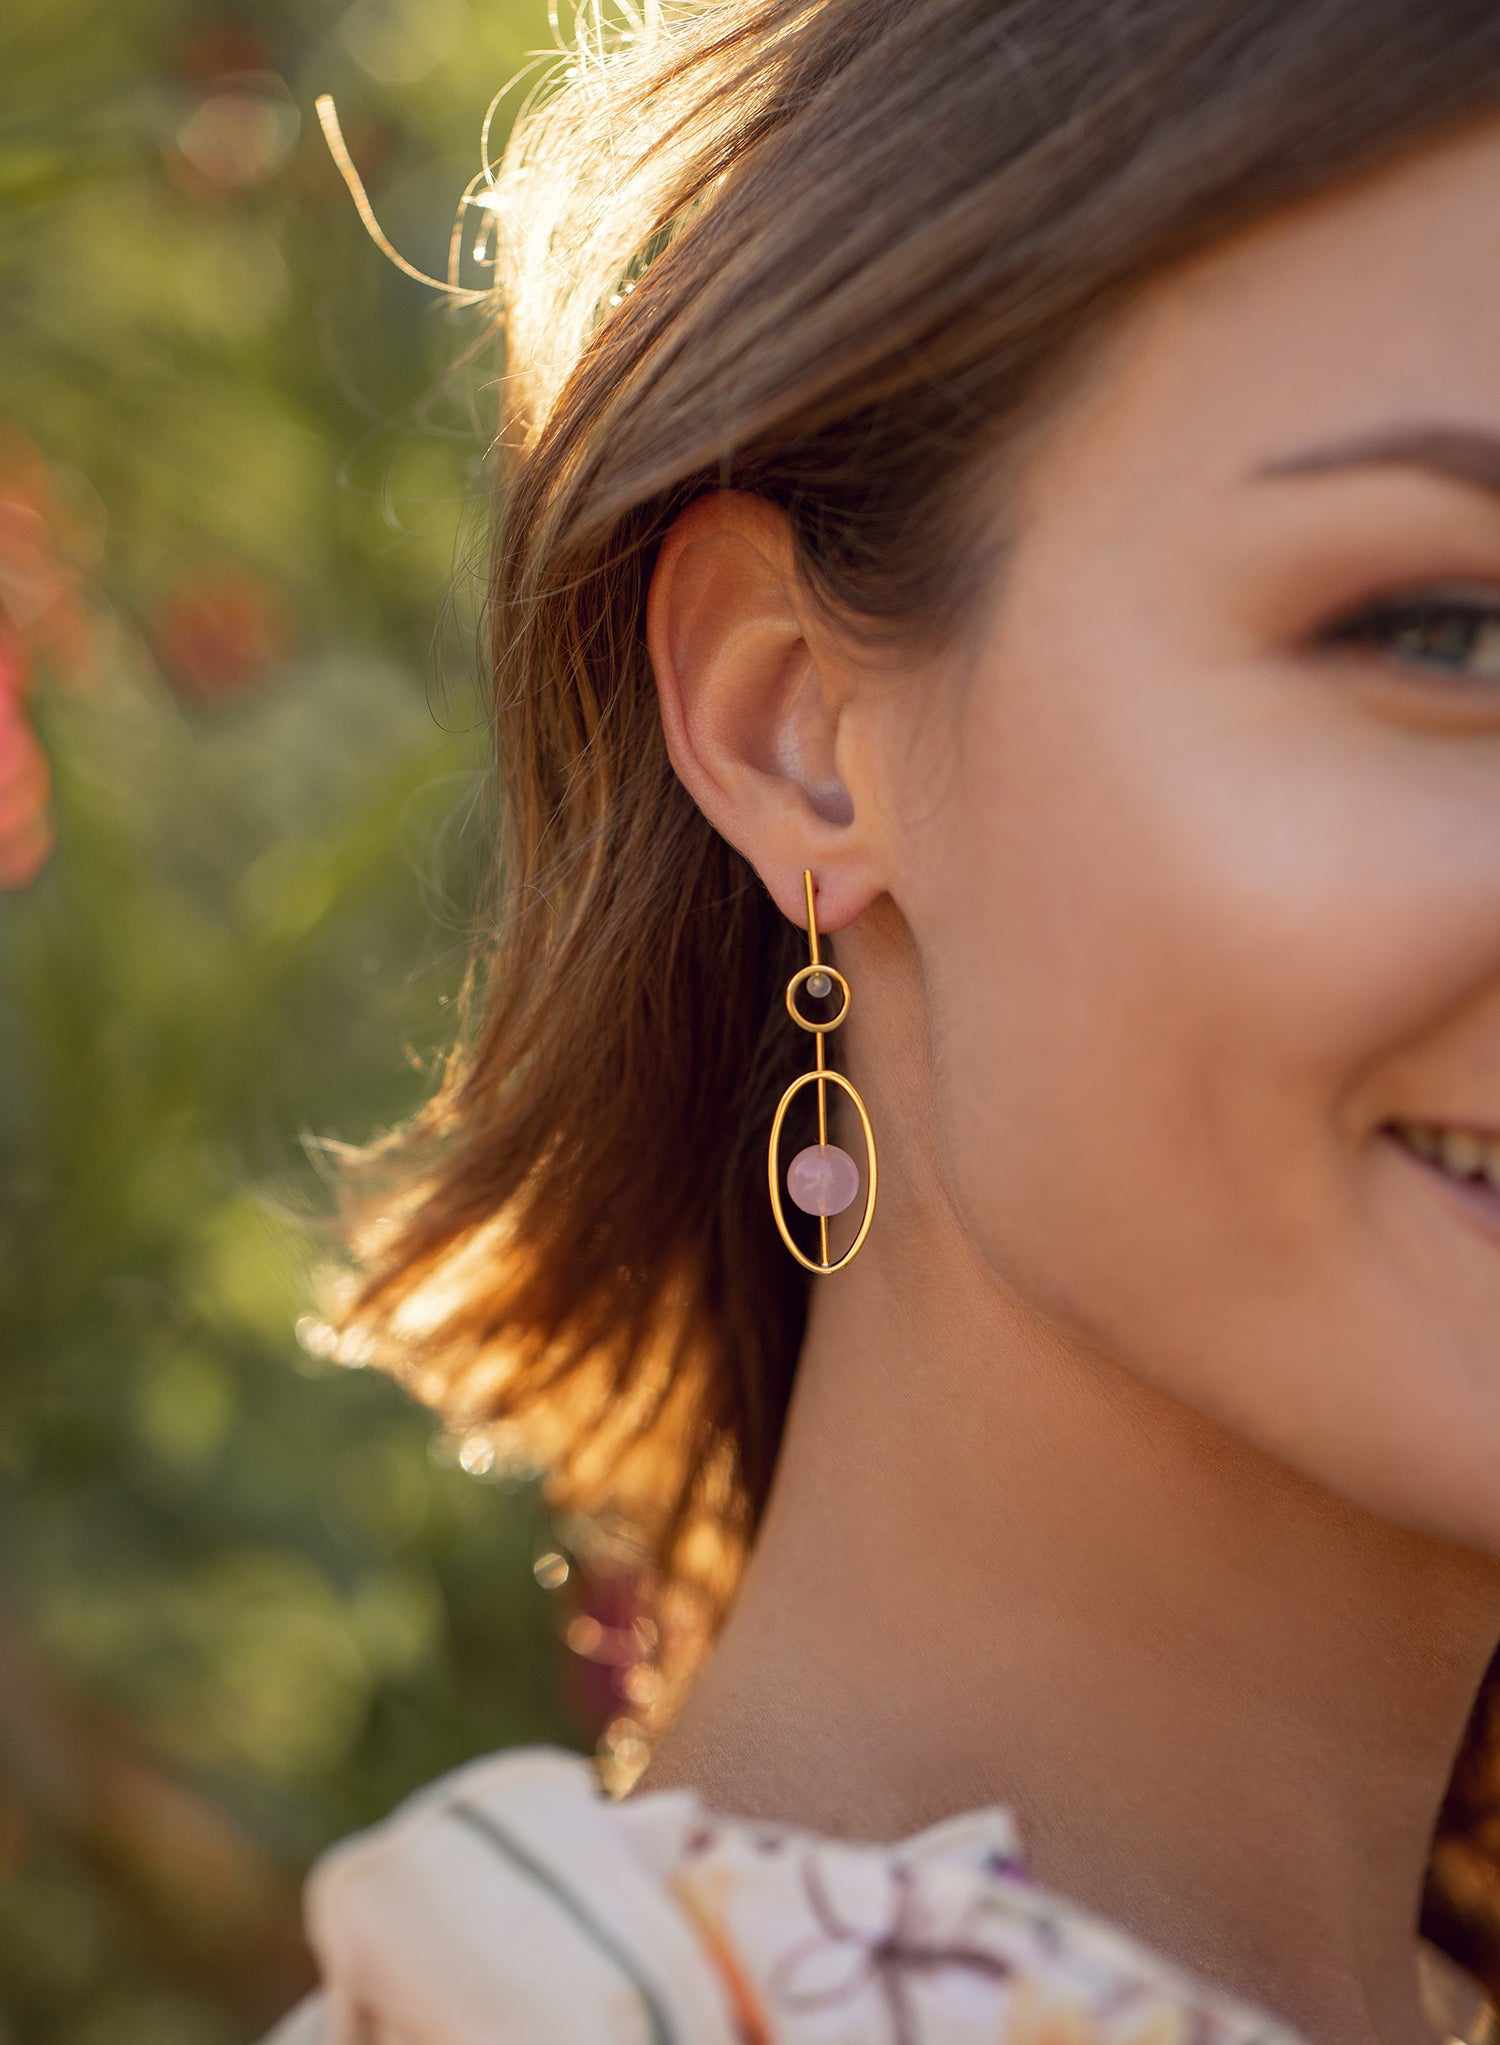 Earrings - Original gold plated earrings with geometric motifs